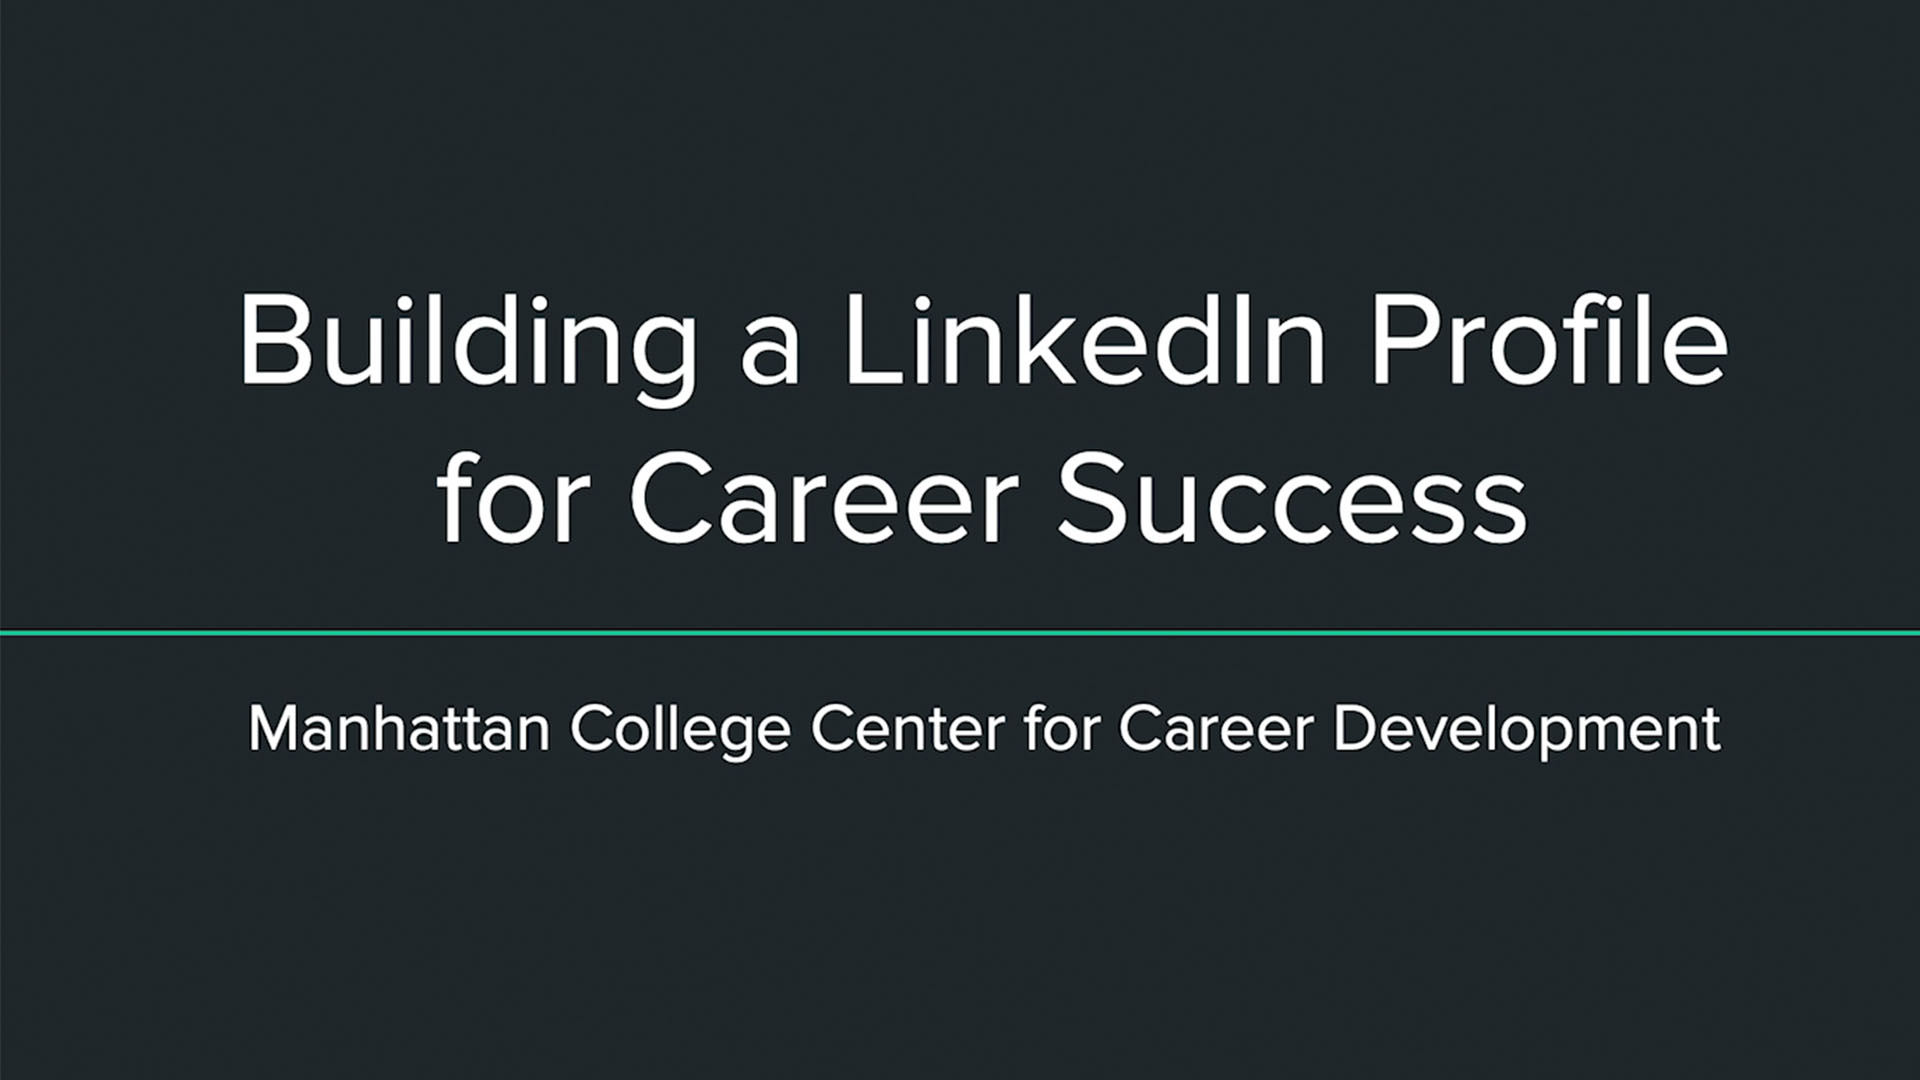 Building a LinkedIn Profile, Manhattan College Center for Career Development